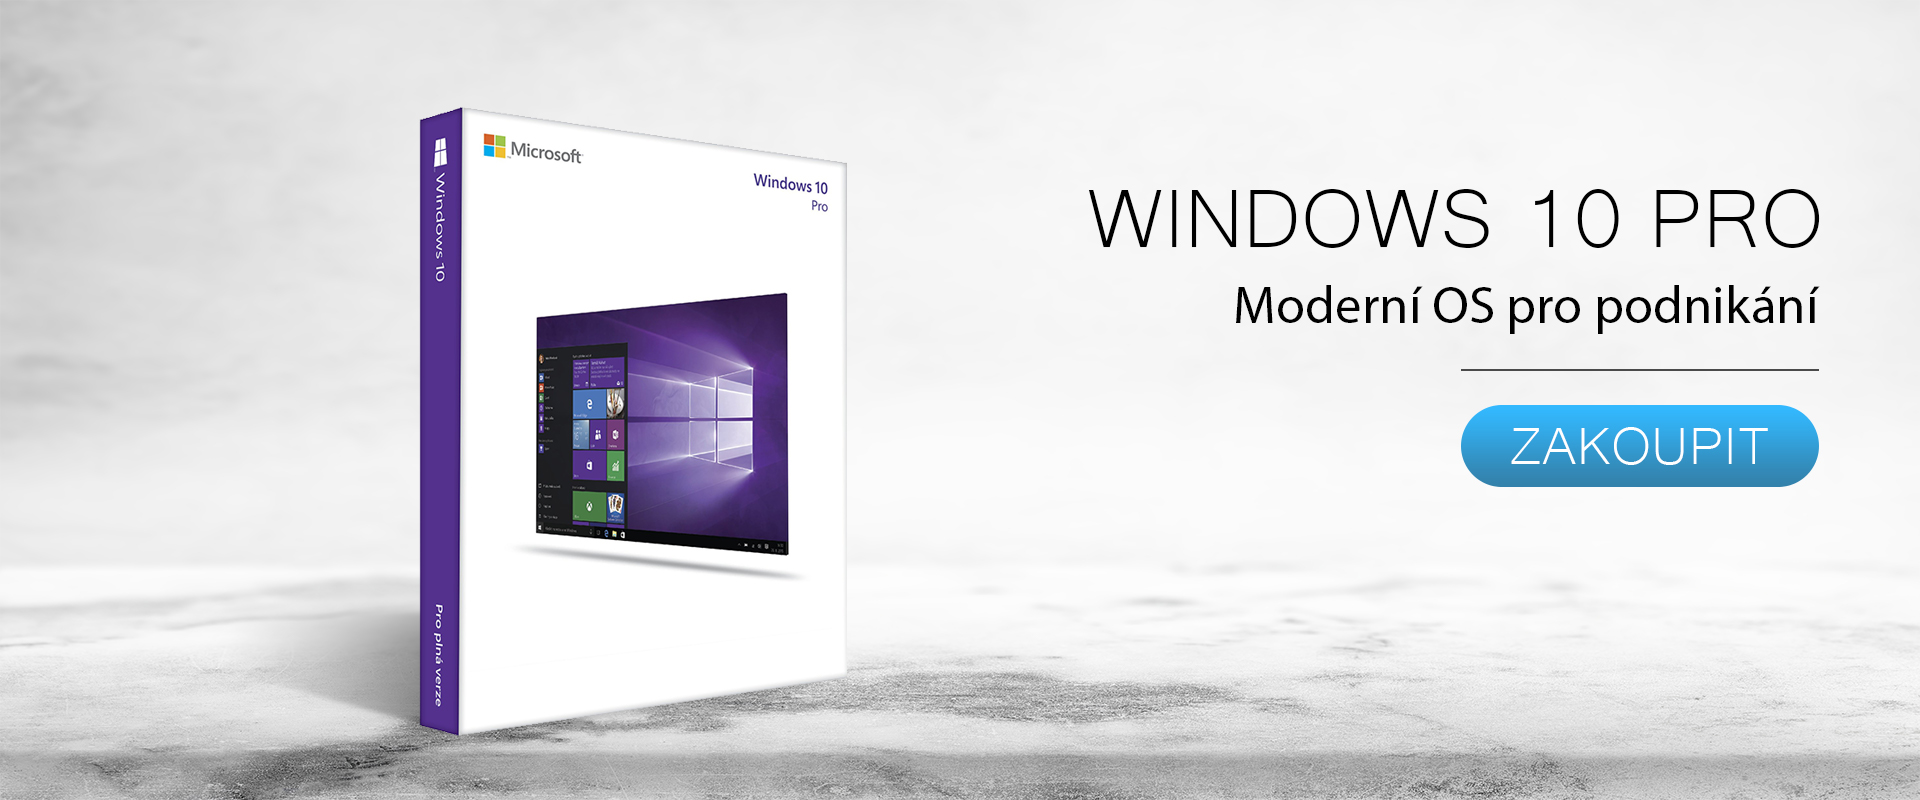 Windows 10 Pro - Carousel